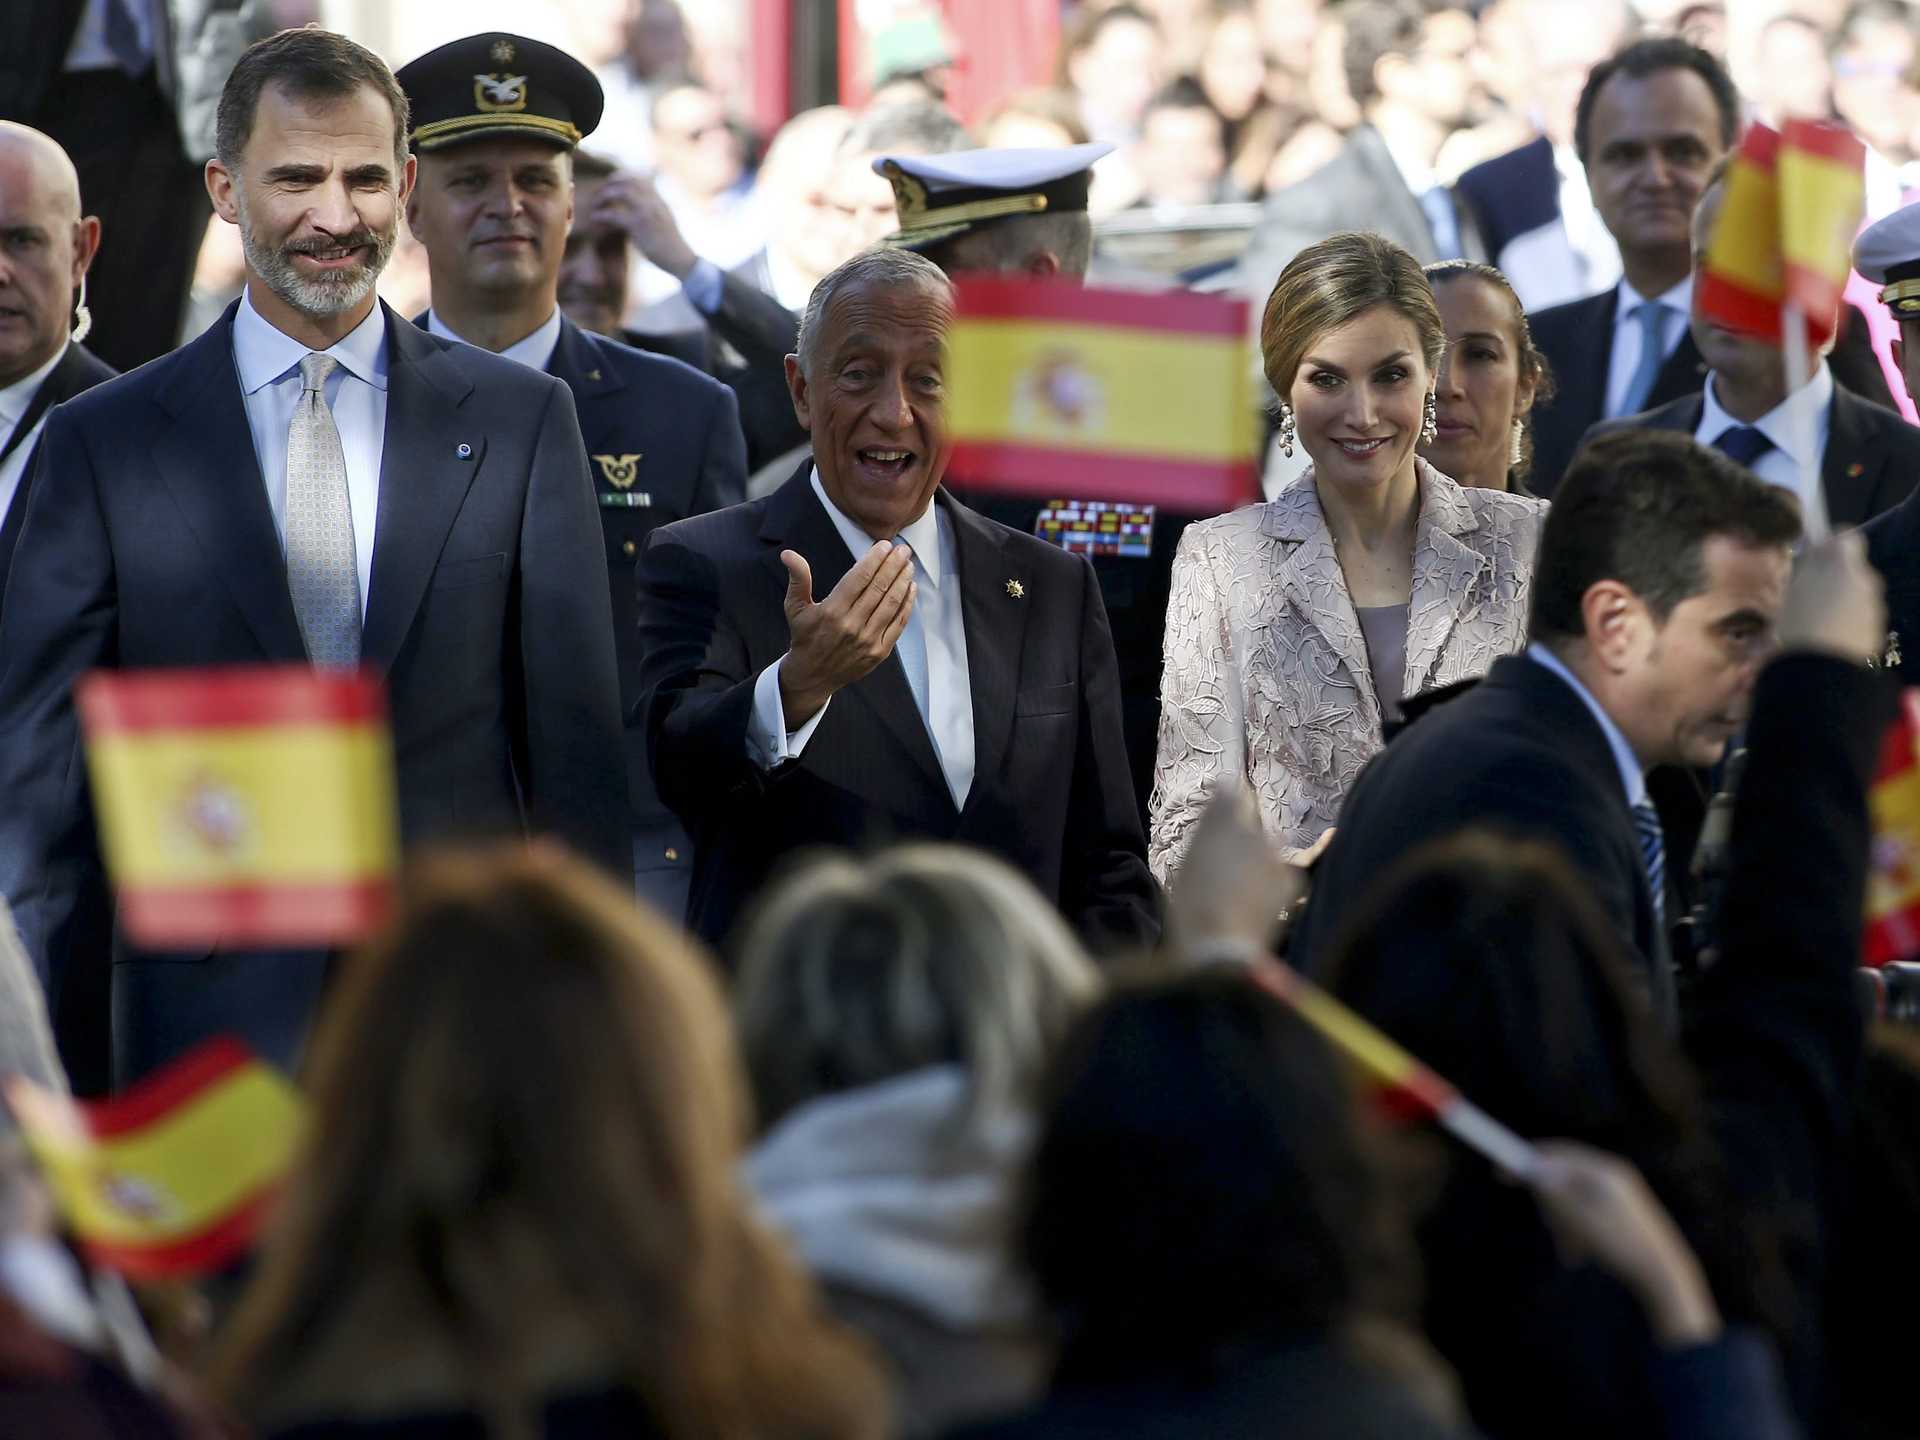 Spanish royal couple visits Portugal